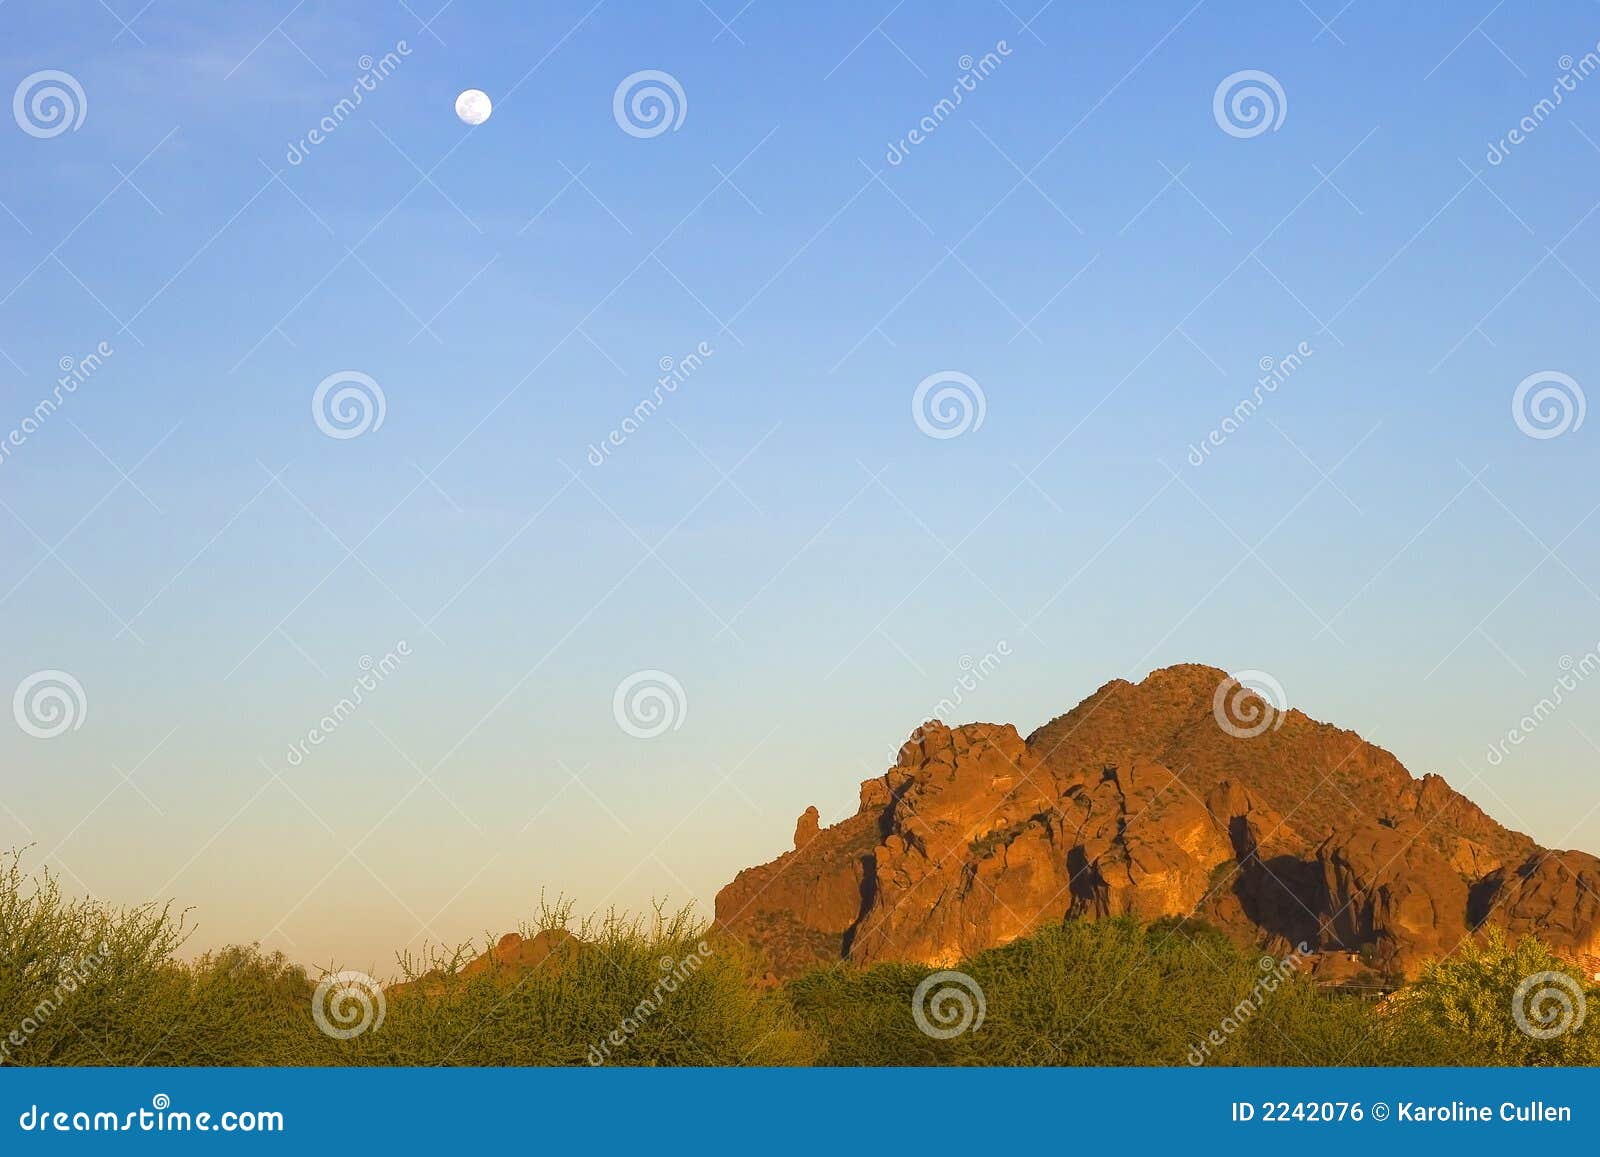 moon and camelback mountain